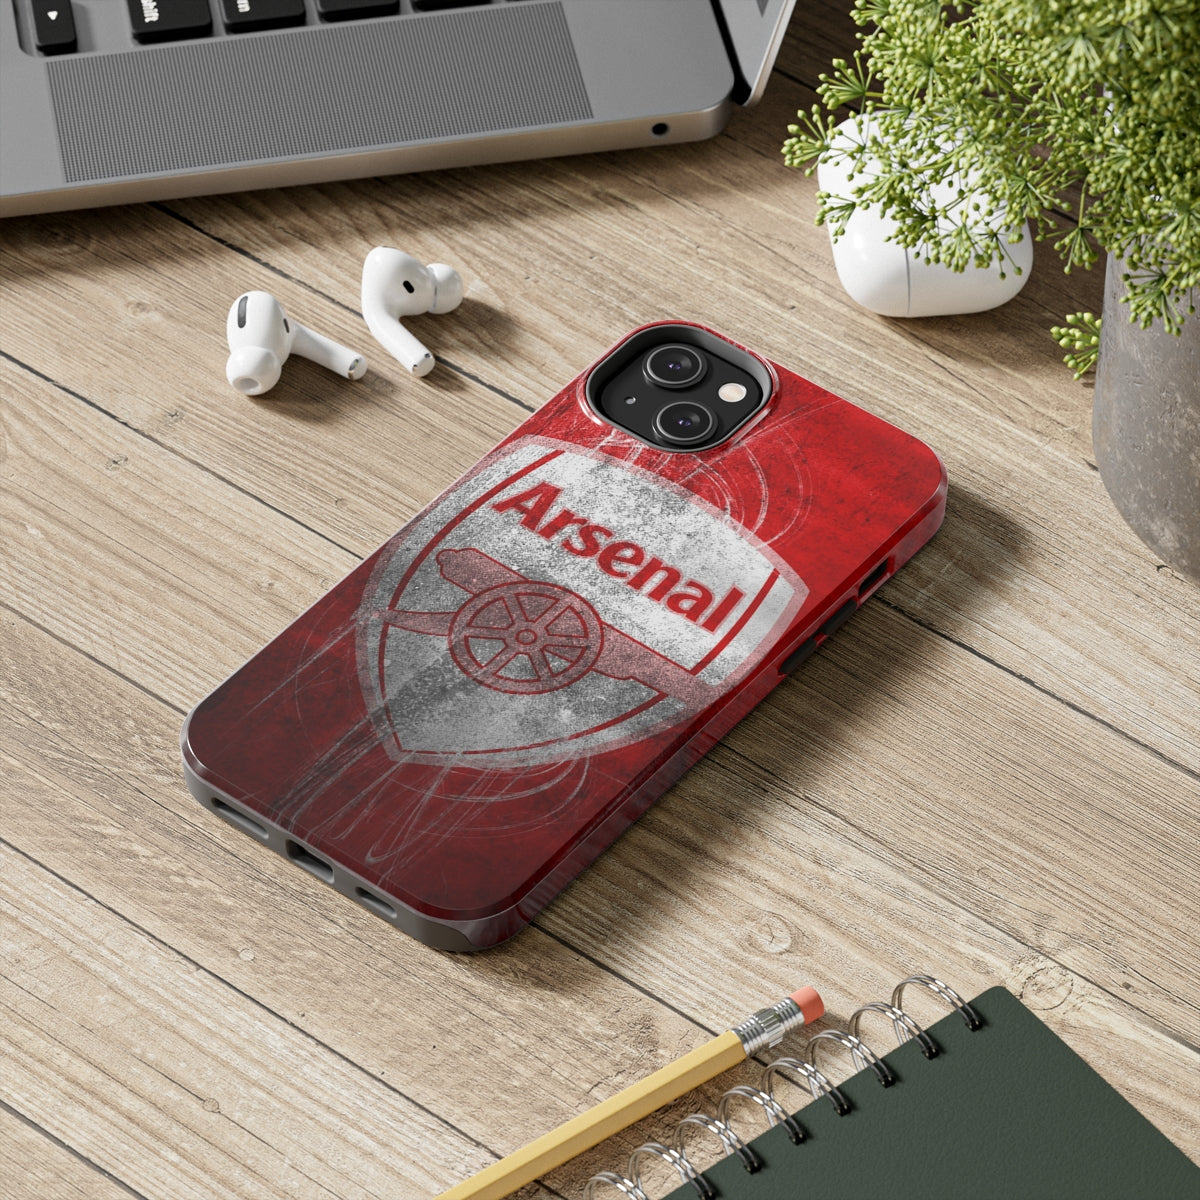 Arsenal Phone Case